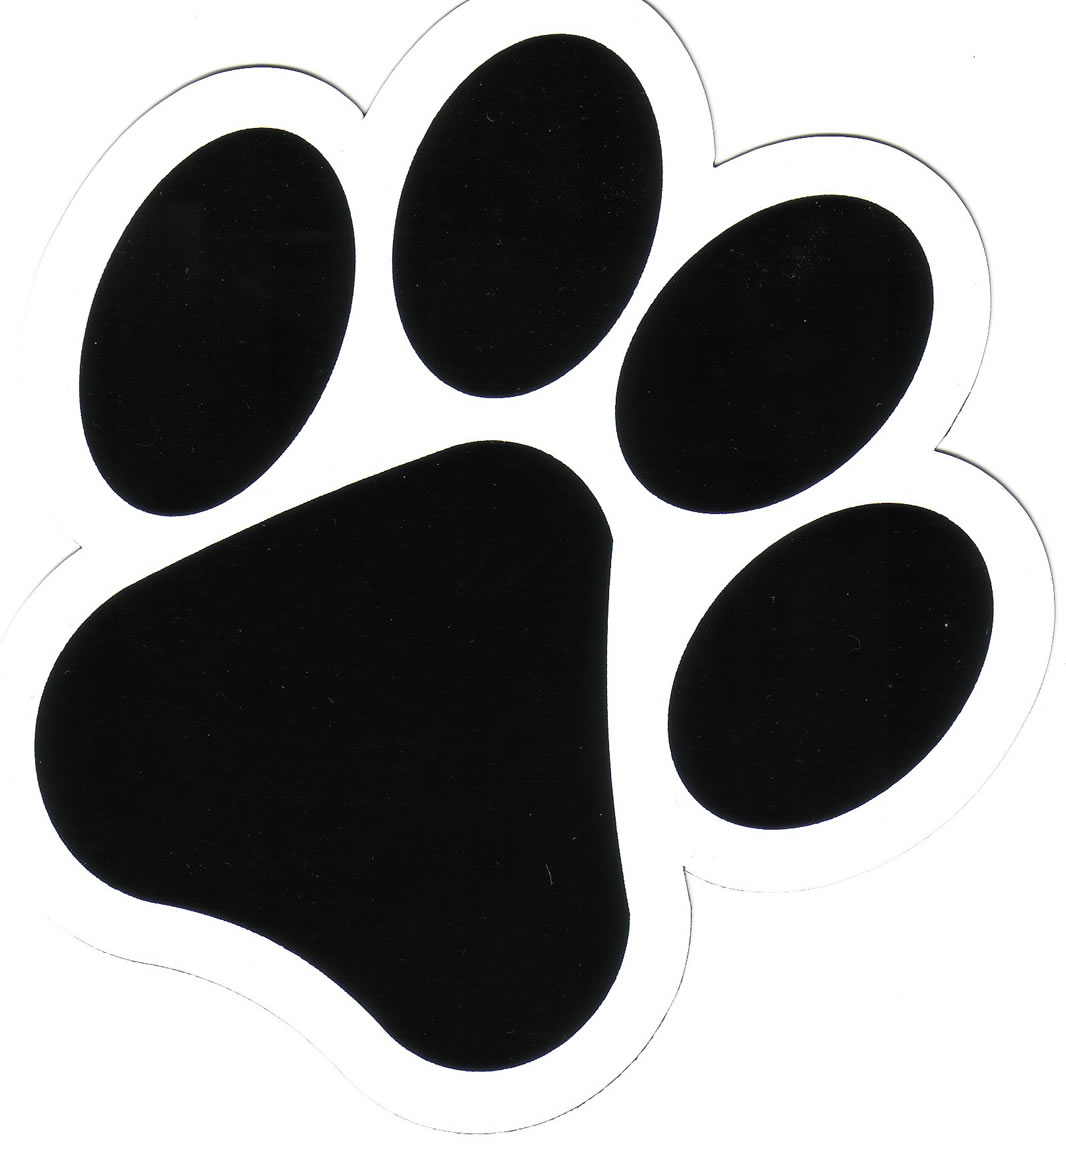 Dog Paw Print Clip Art Free Download | Clipart Panda - Free ...